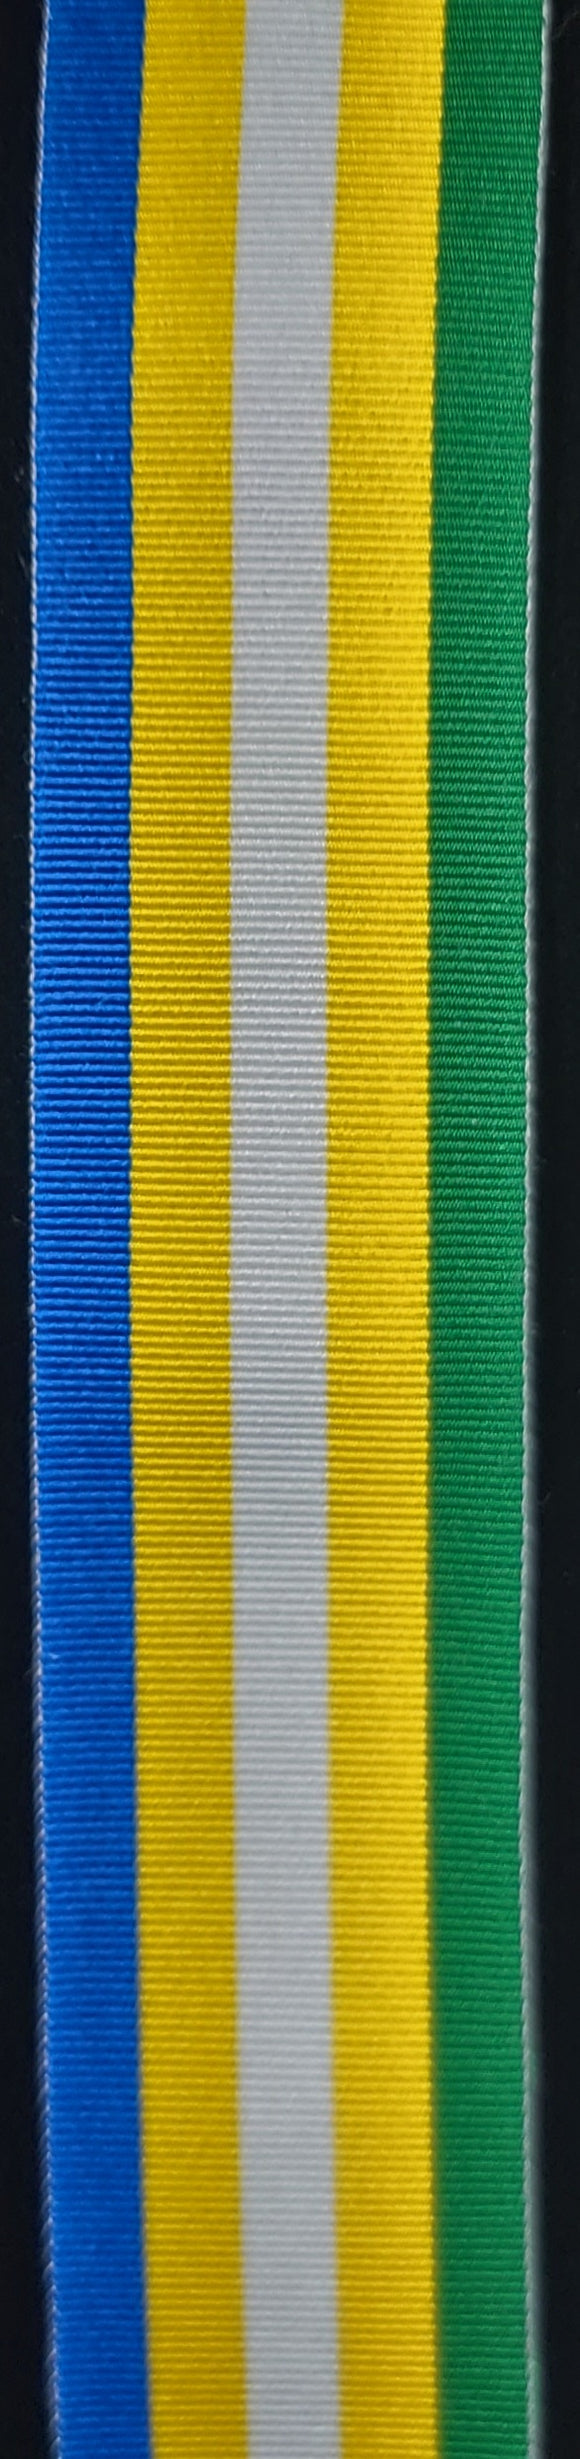 Ribbon, Solomon Island Independence Medal